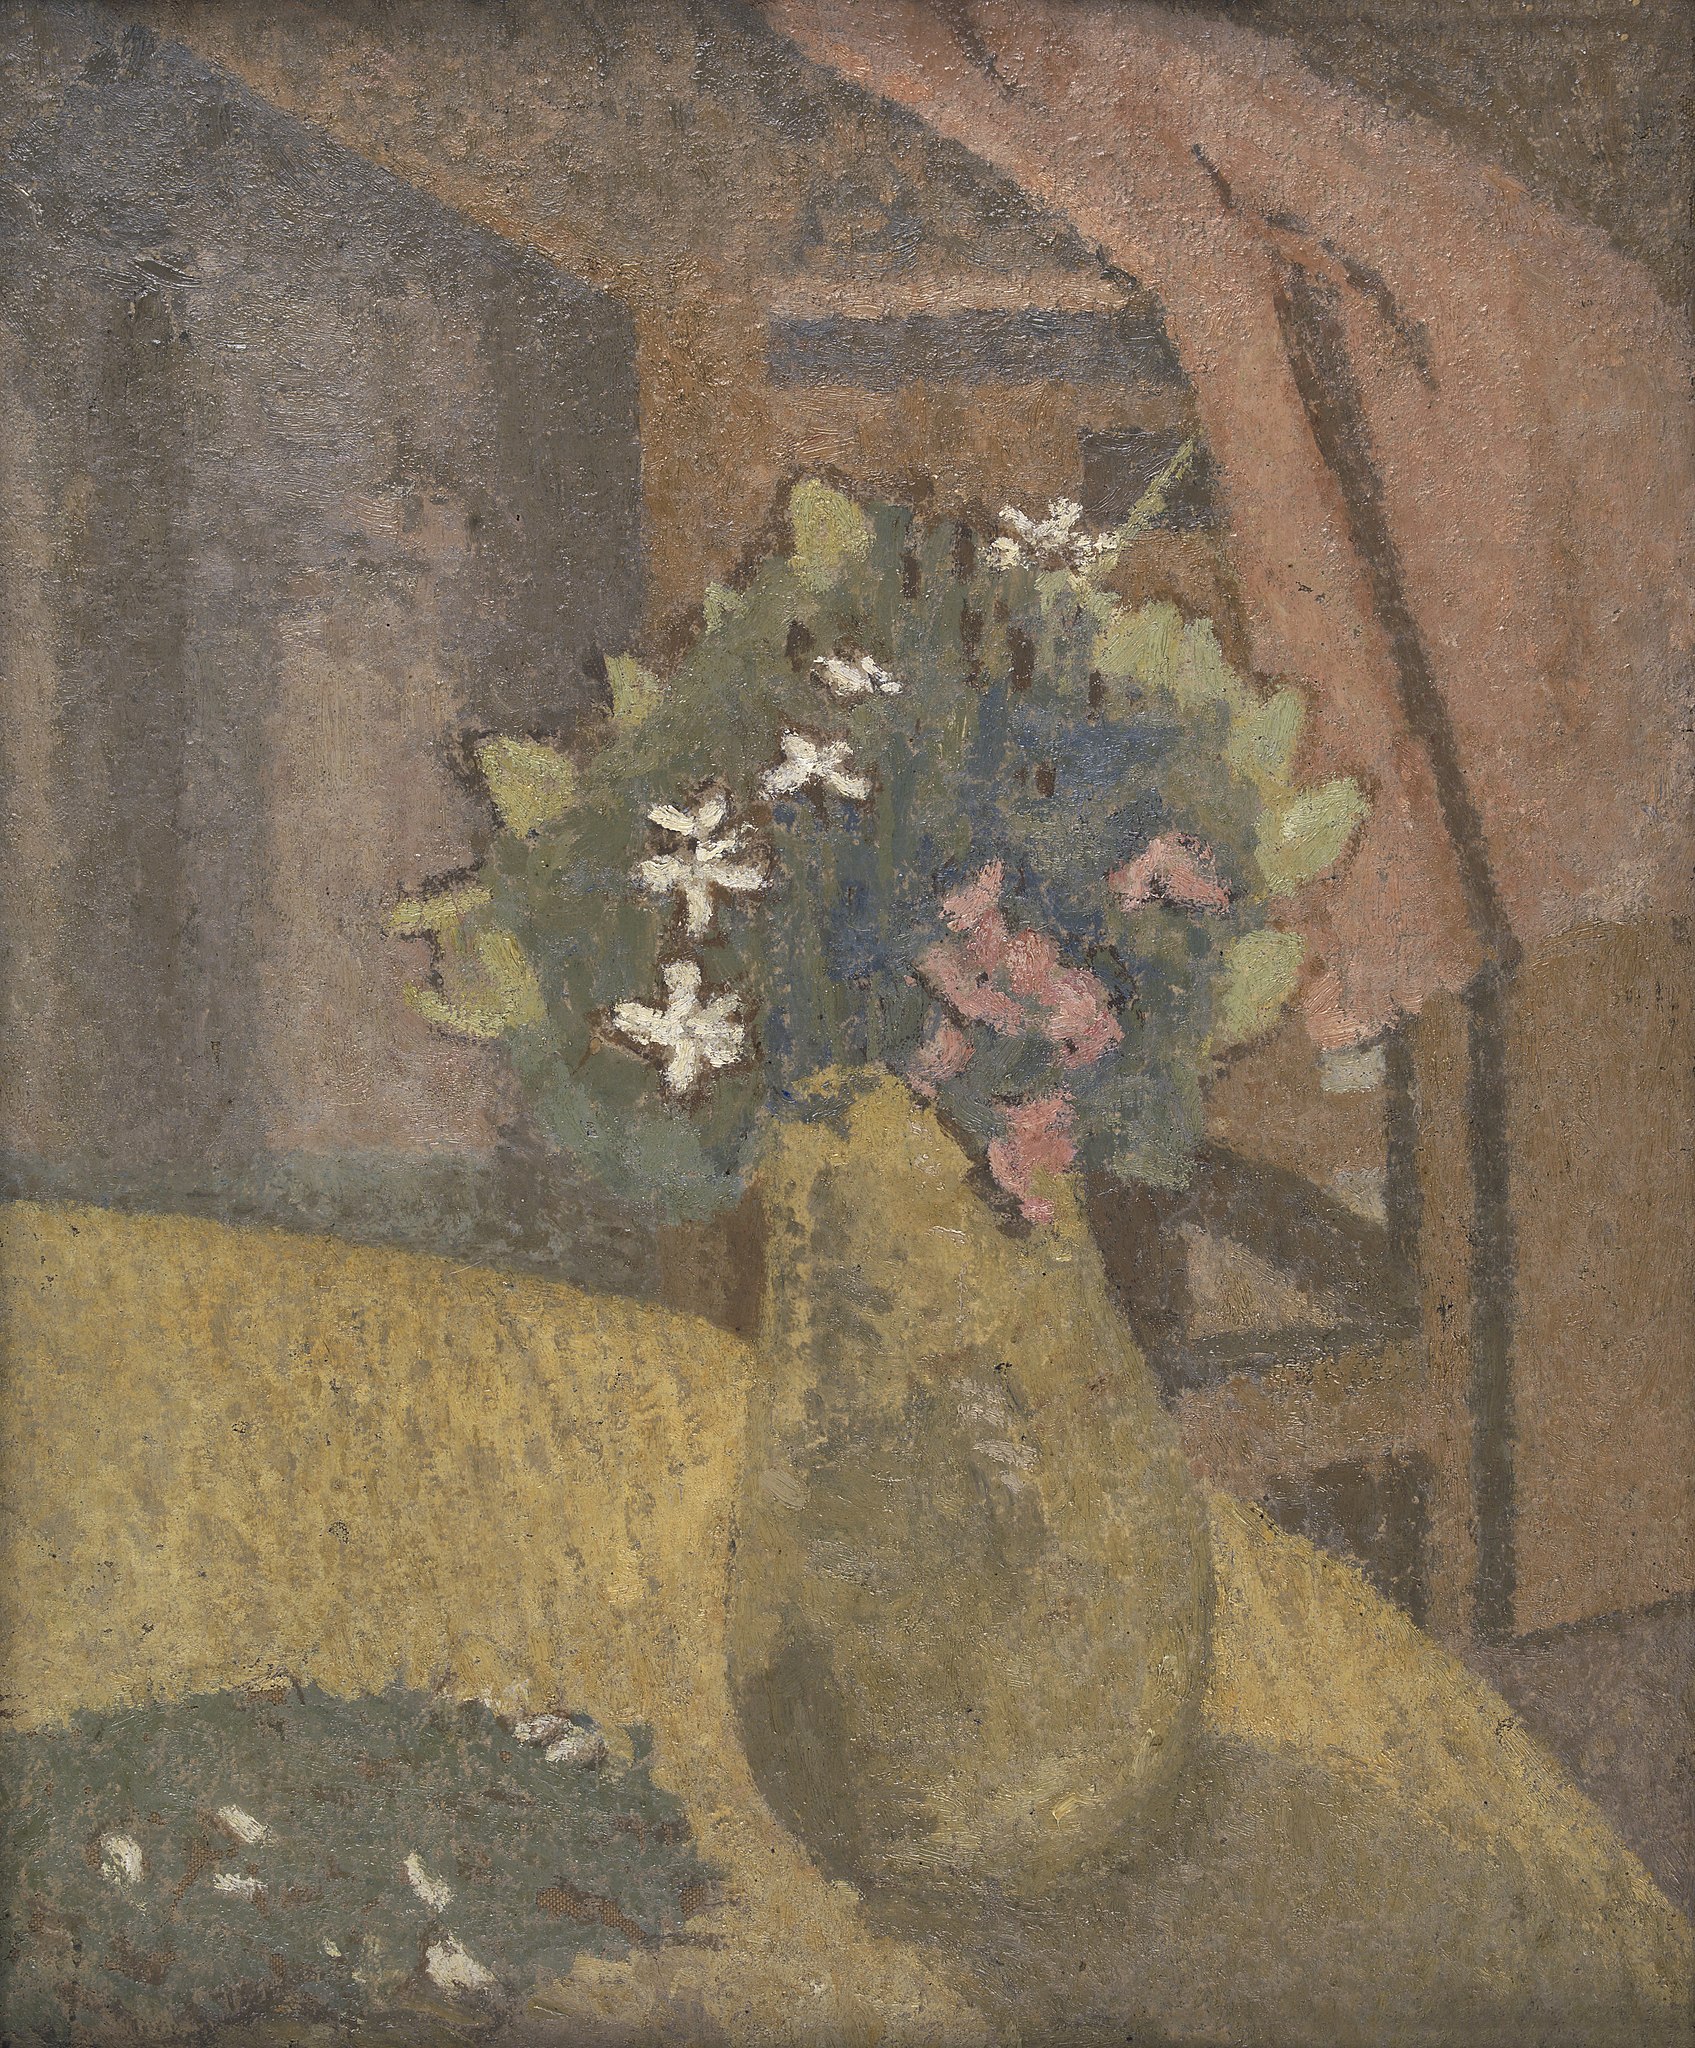 Wazon kwiatów by Gwen John - lata 10. XX w. - 40 x 32 cm 